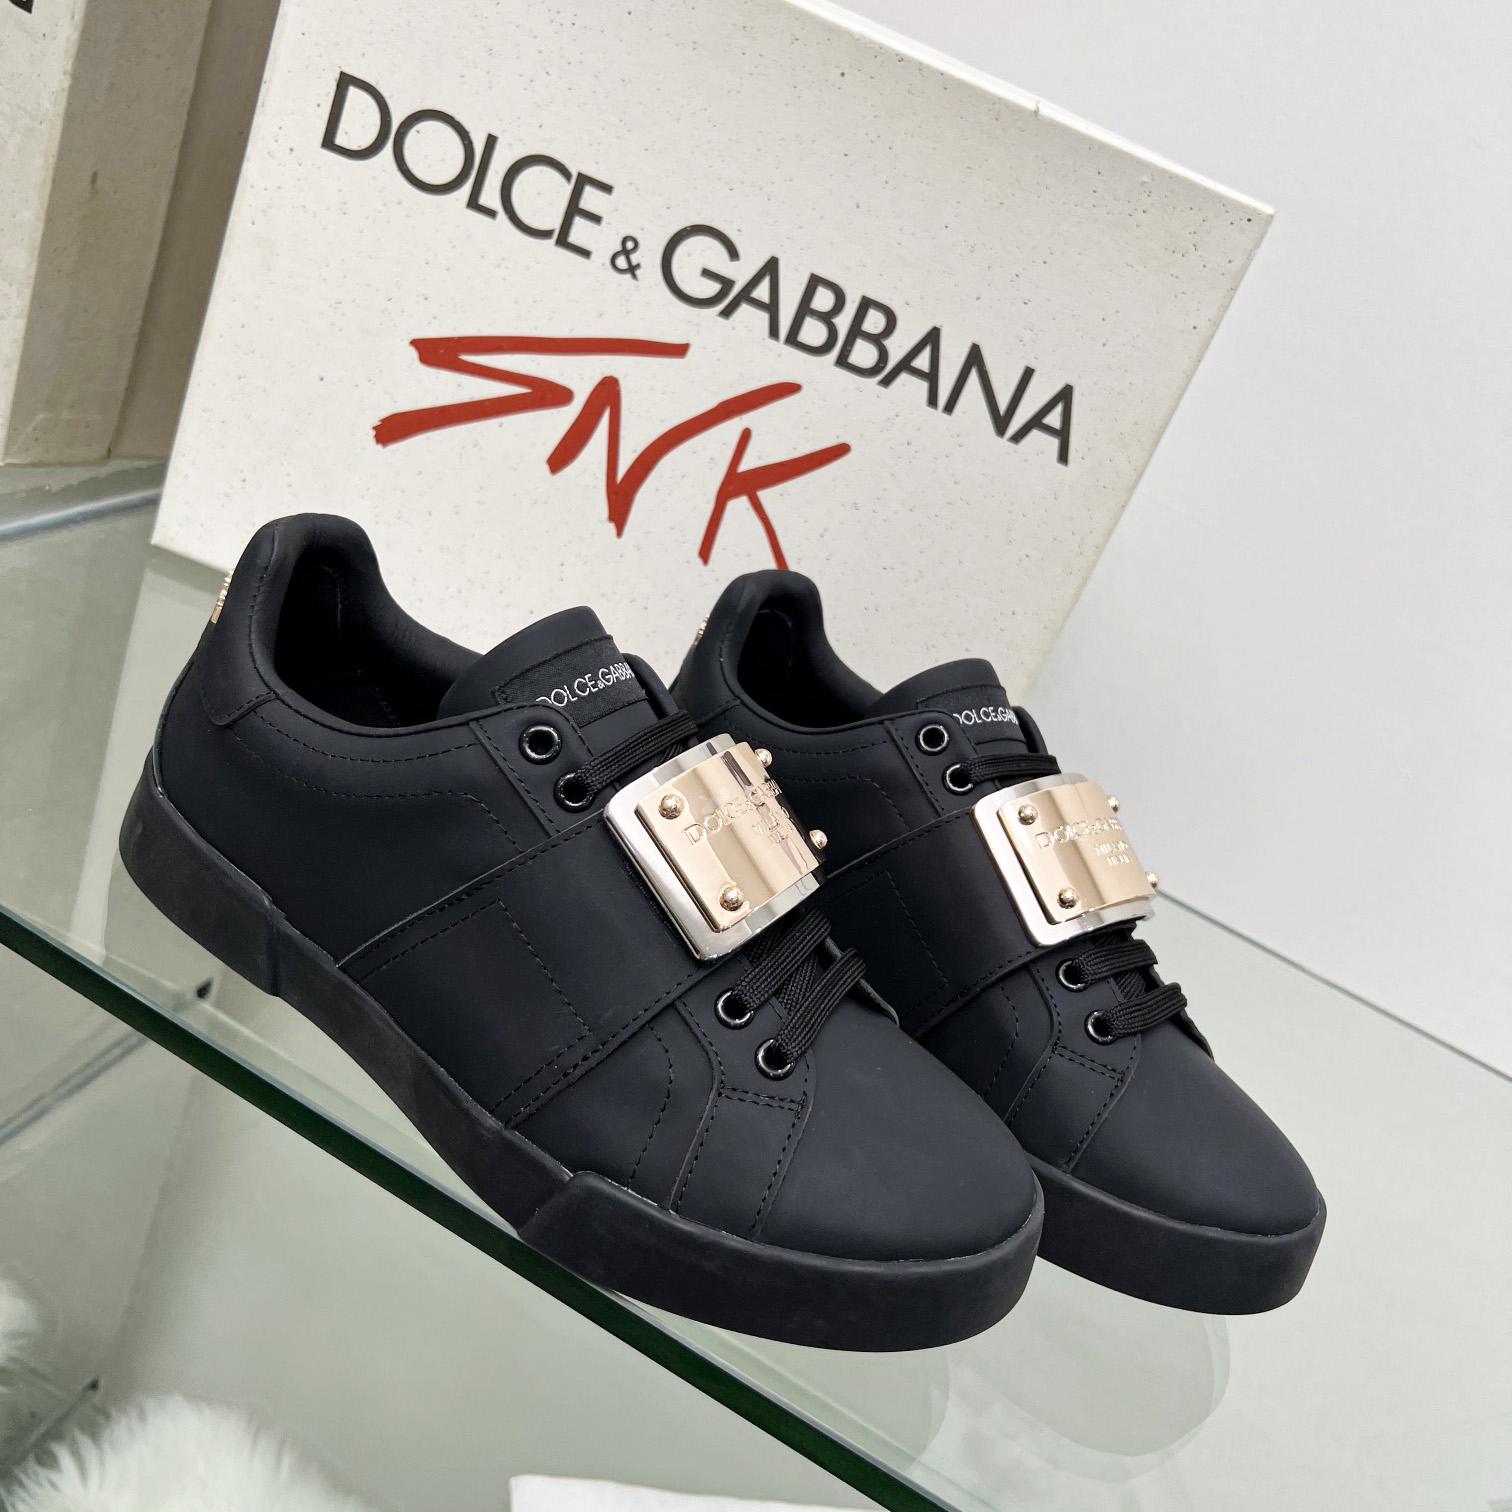 Dolce & Gabbana Portofino Leather Sneakers - DesignerGu